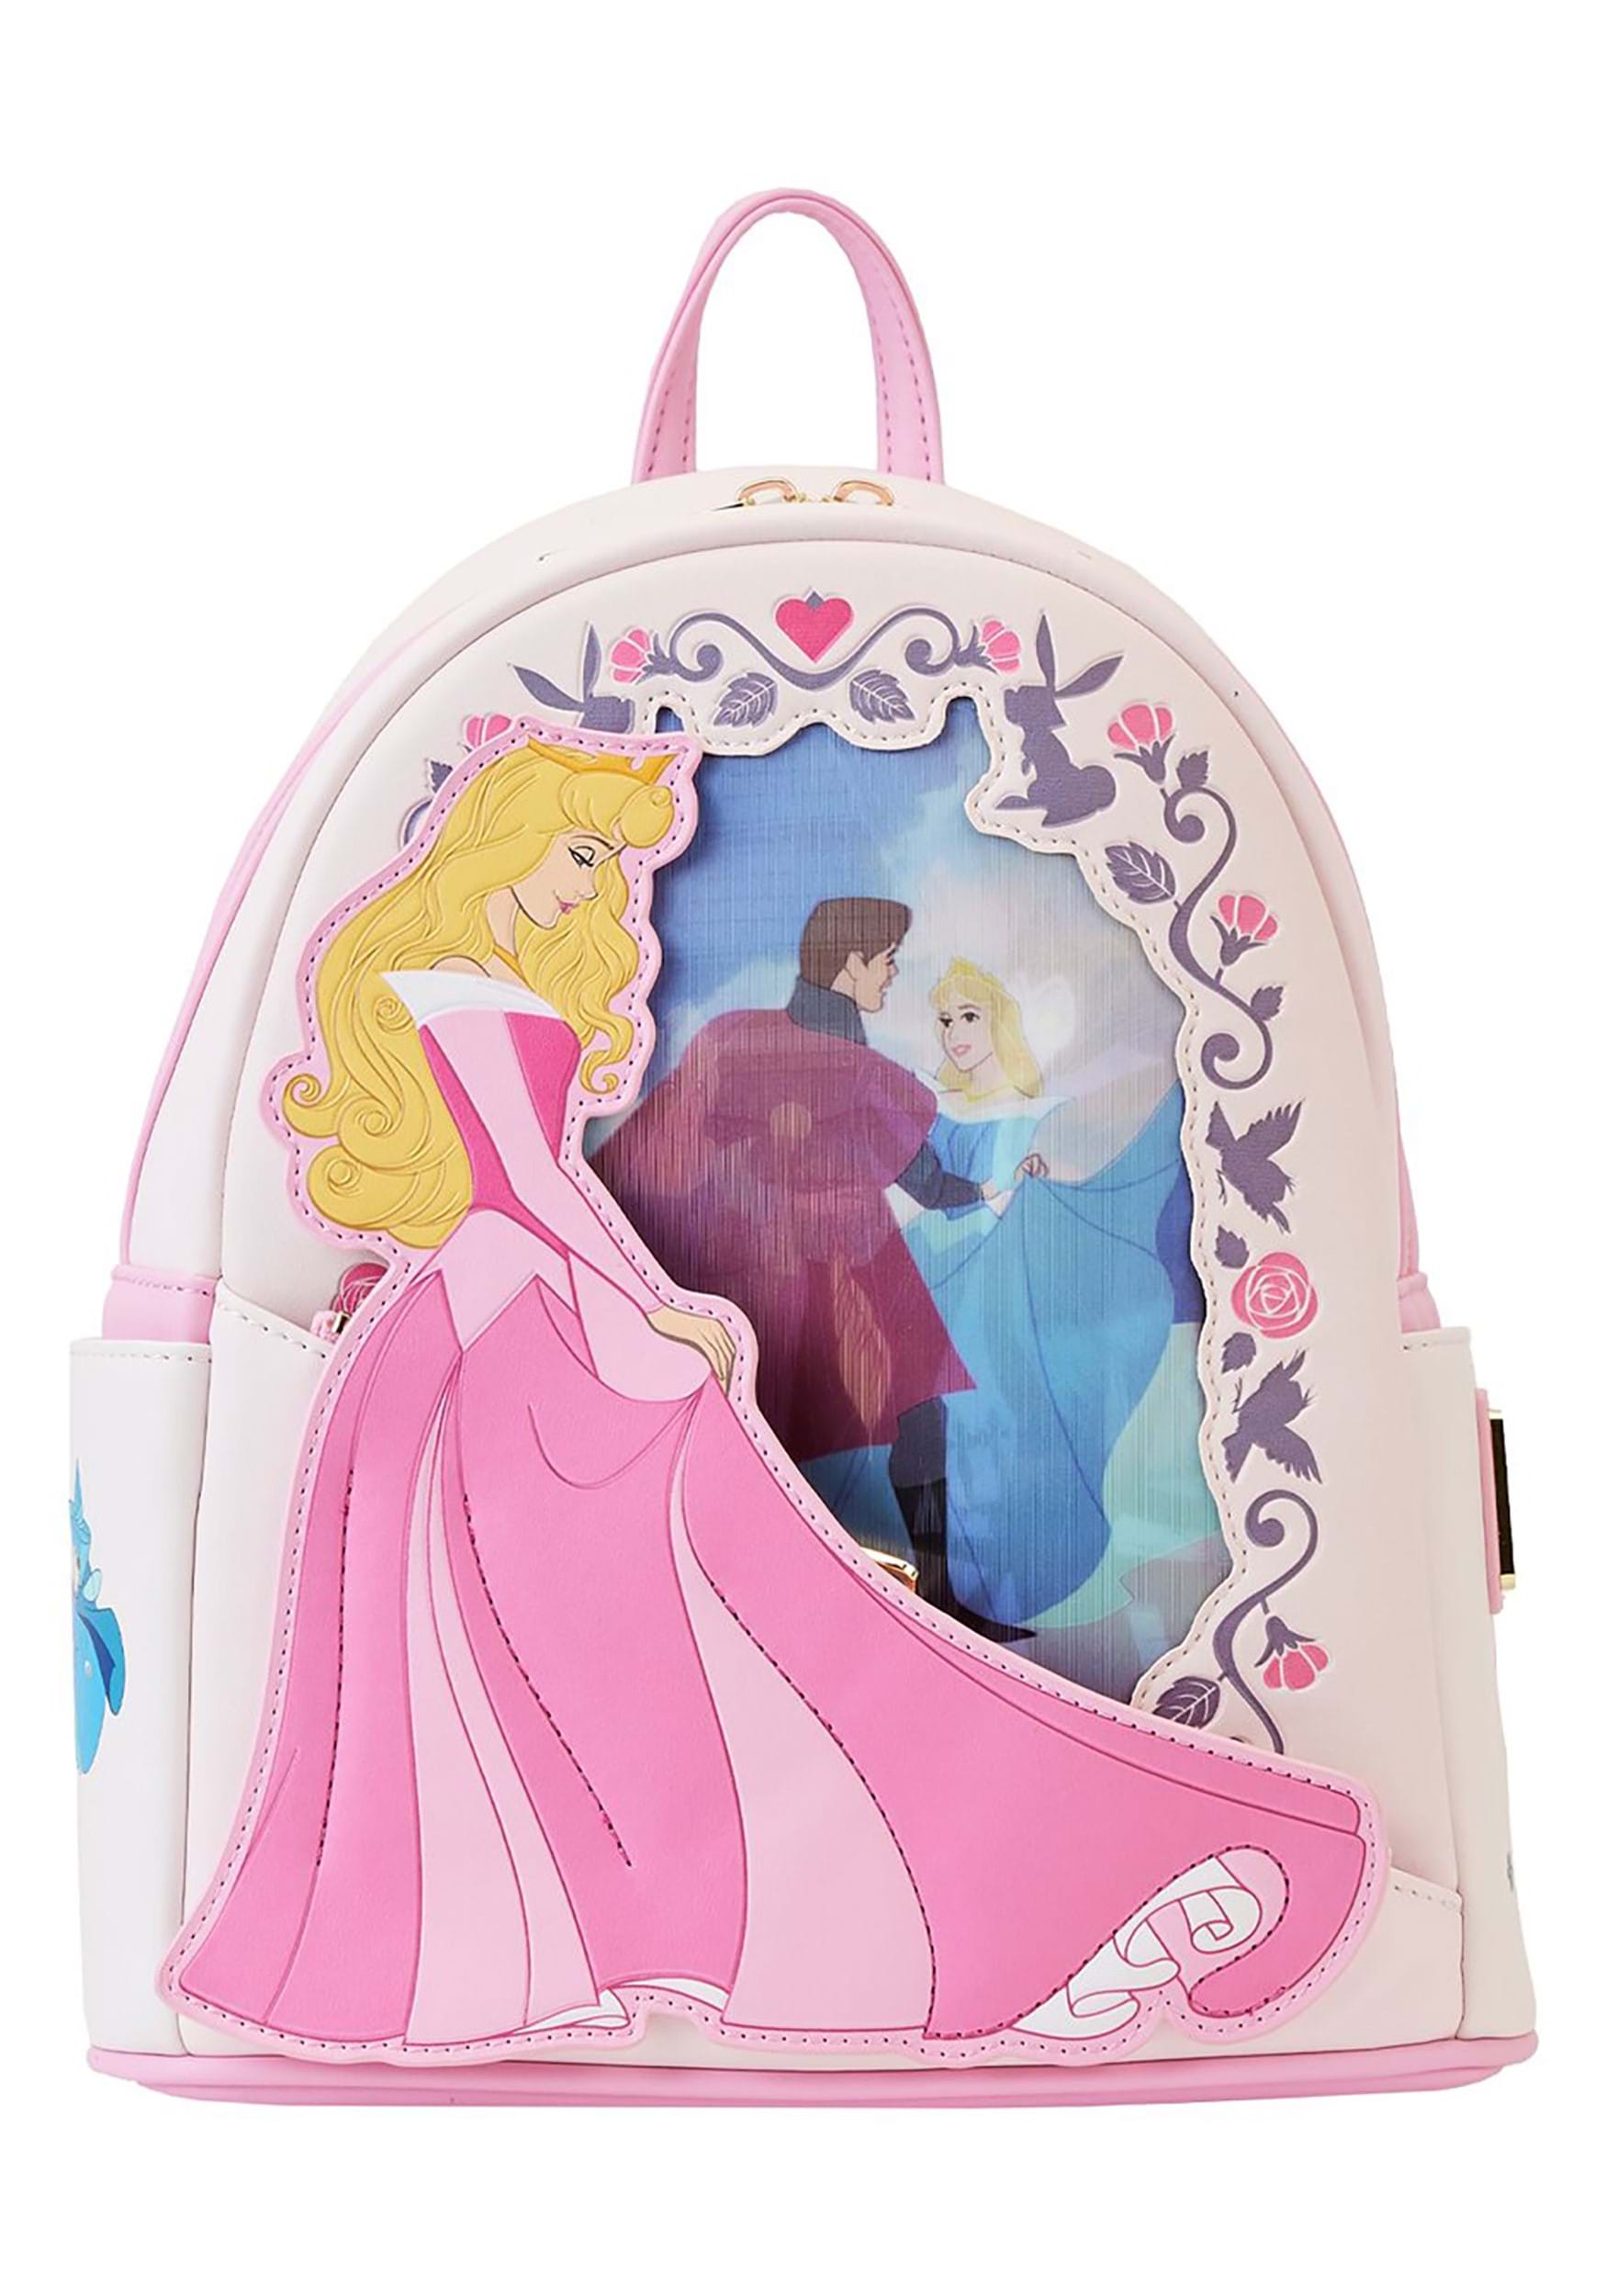 Loungefly Disney Sleeping Beauty Castle Mini Backpack 